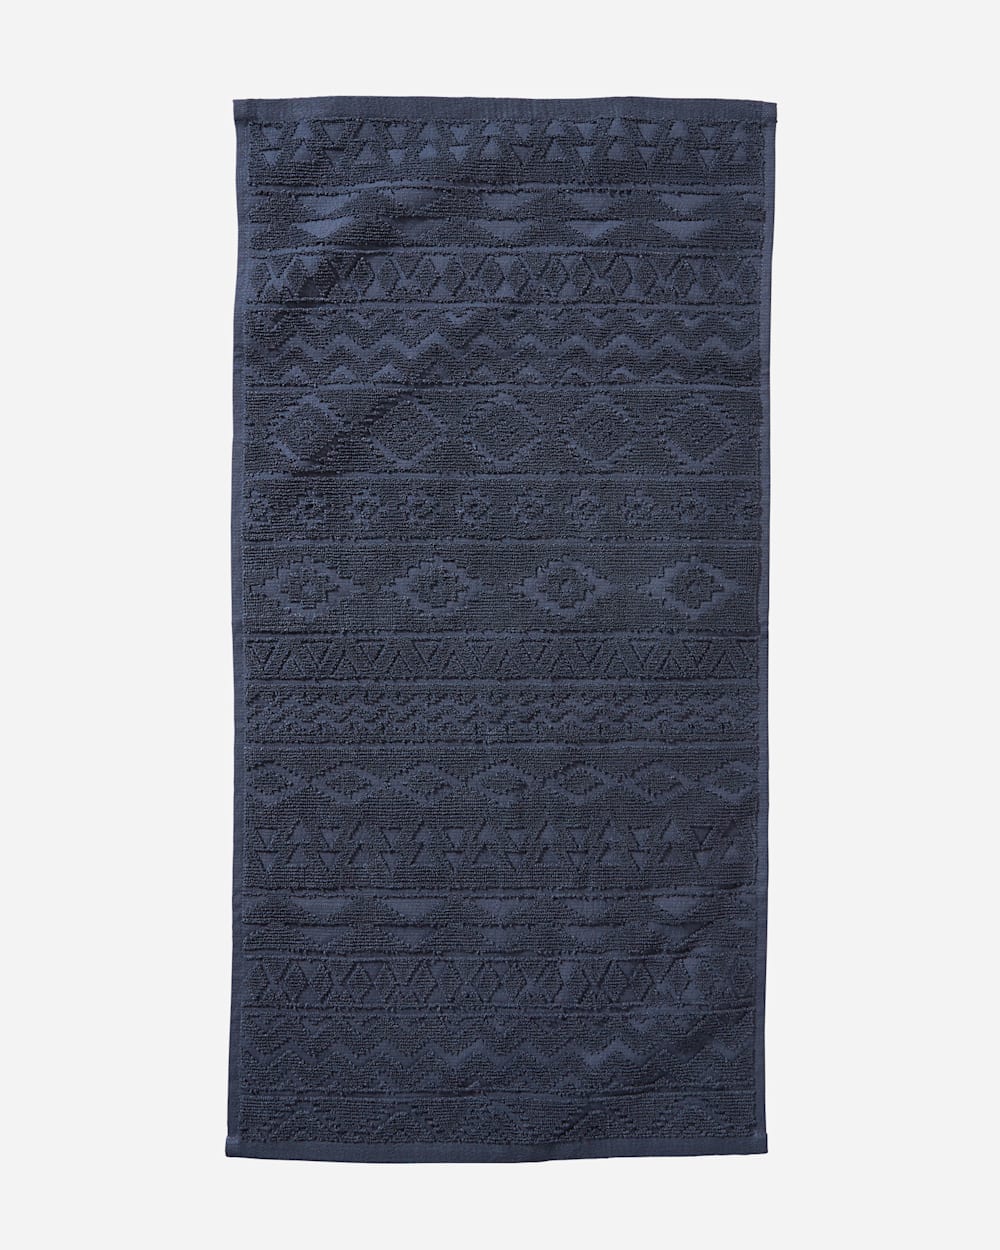 ALTERNATE VIEW OF SANDIA STRIPE TOWEL SET IN INDIGO image number 2